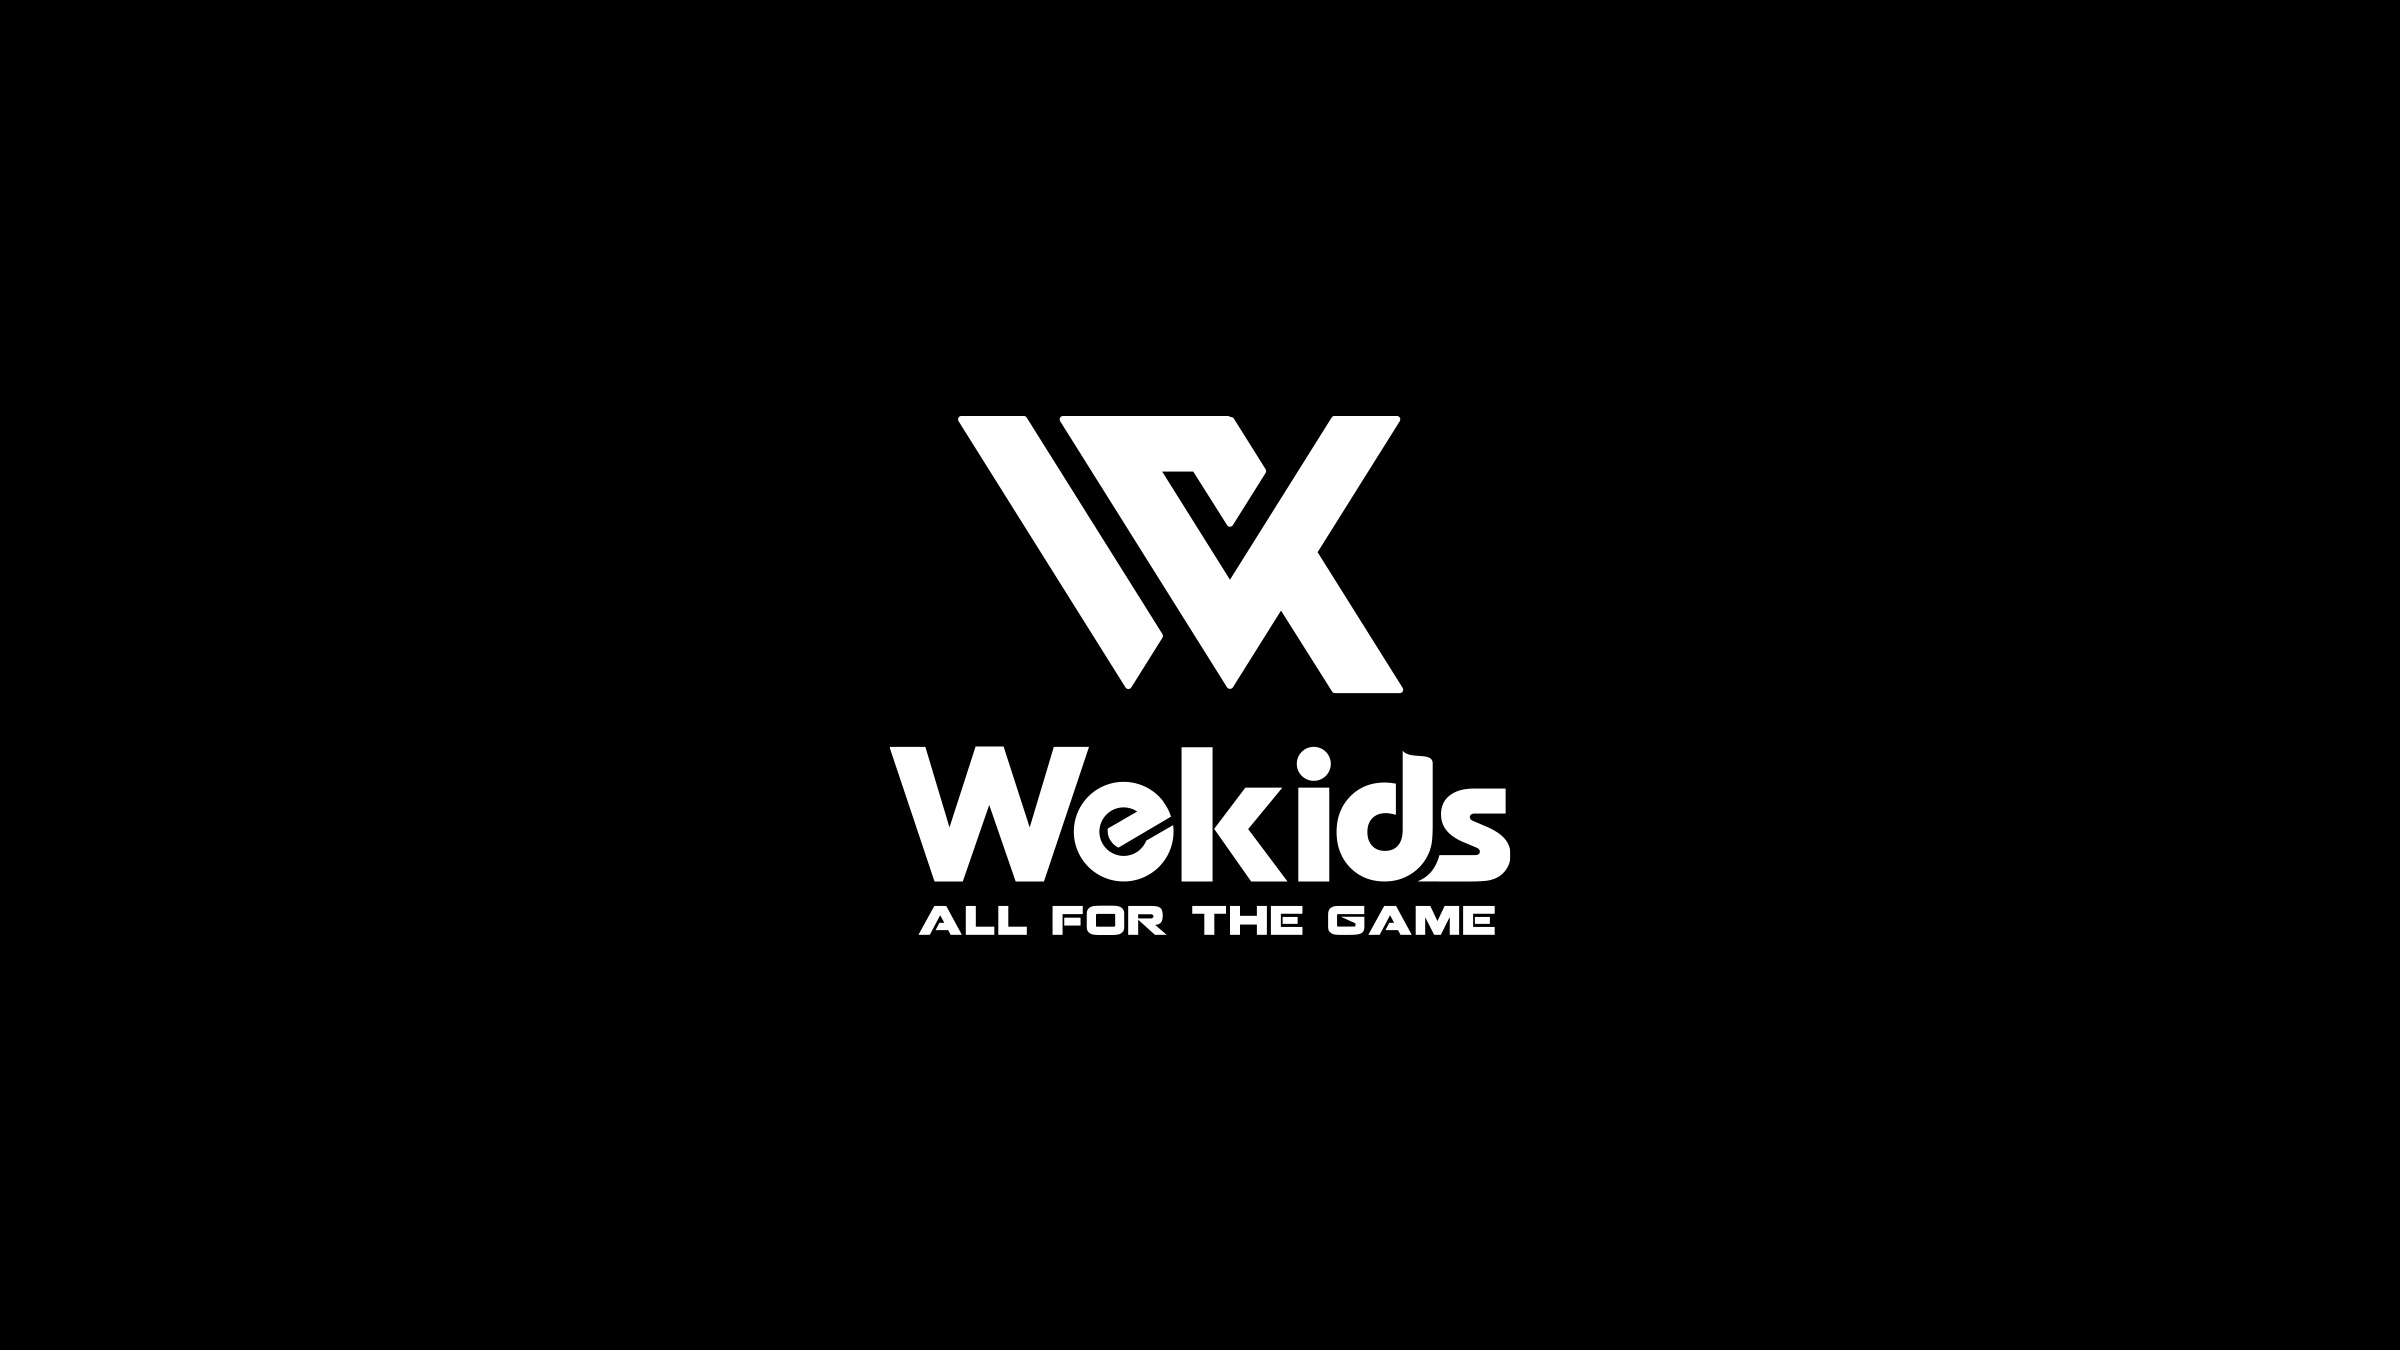 Wekids